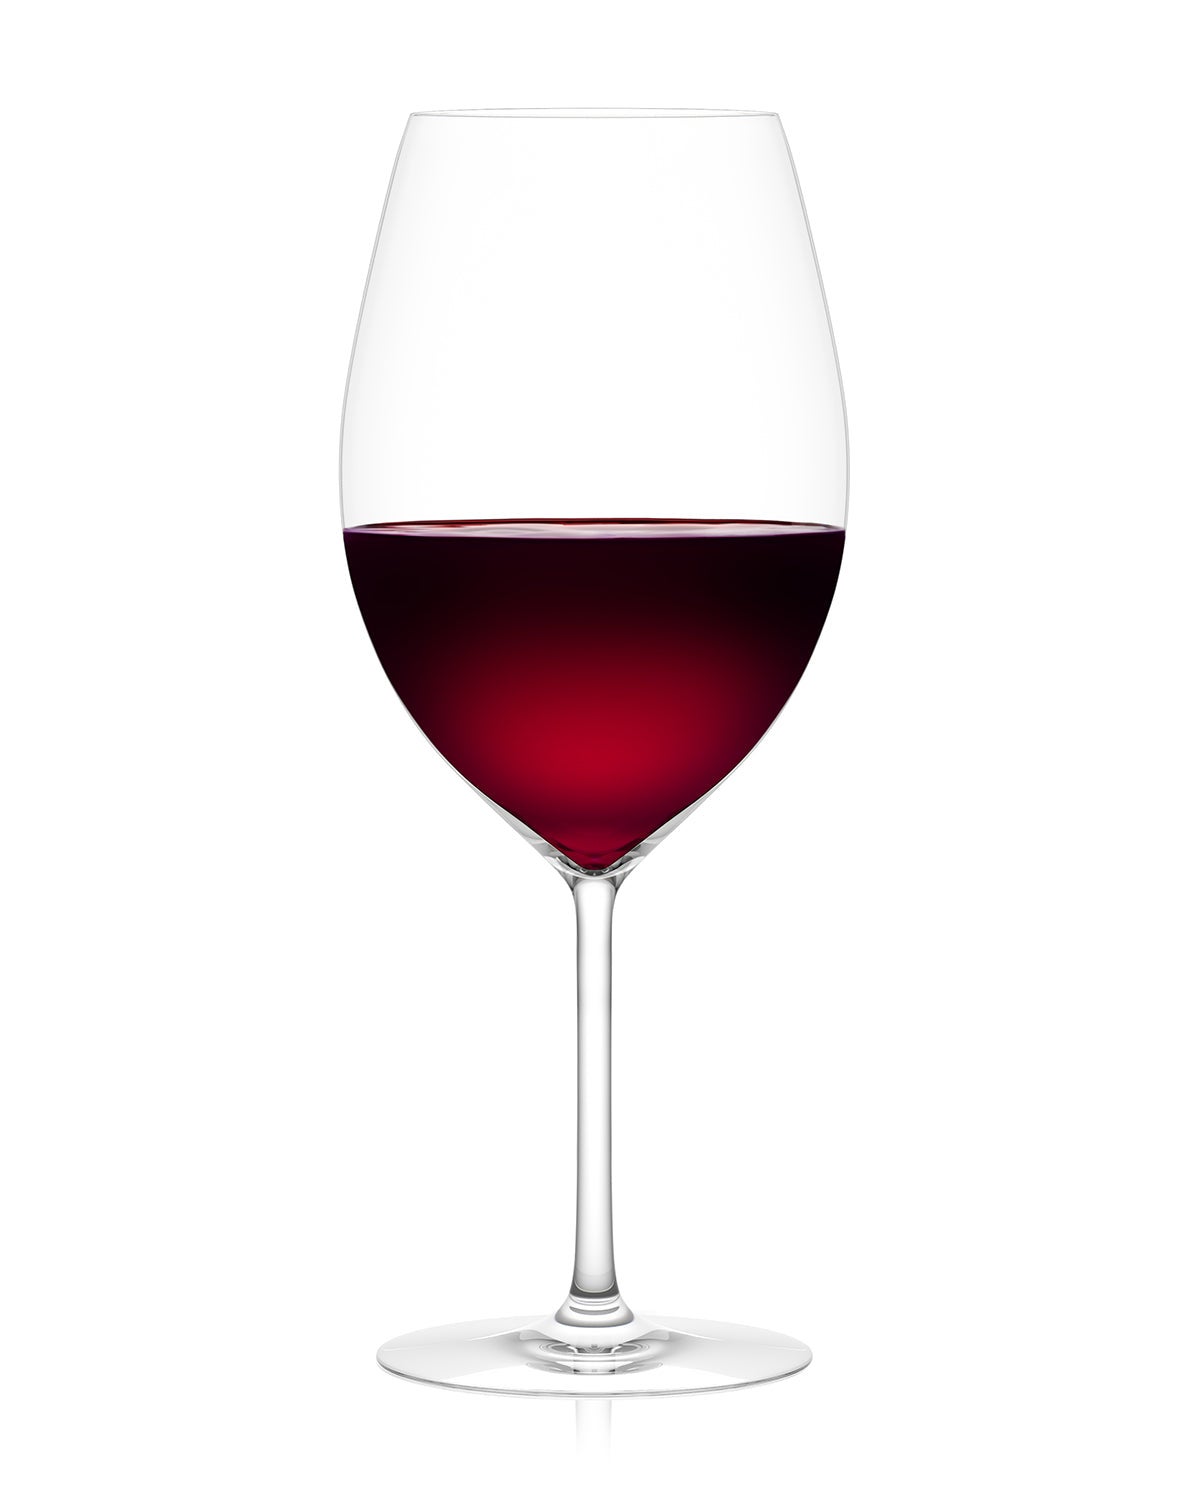 Plumm Vintage RED a European Crystal Wine Glass - Master Carton (732ml) - 8 Pack